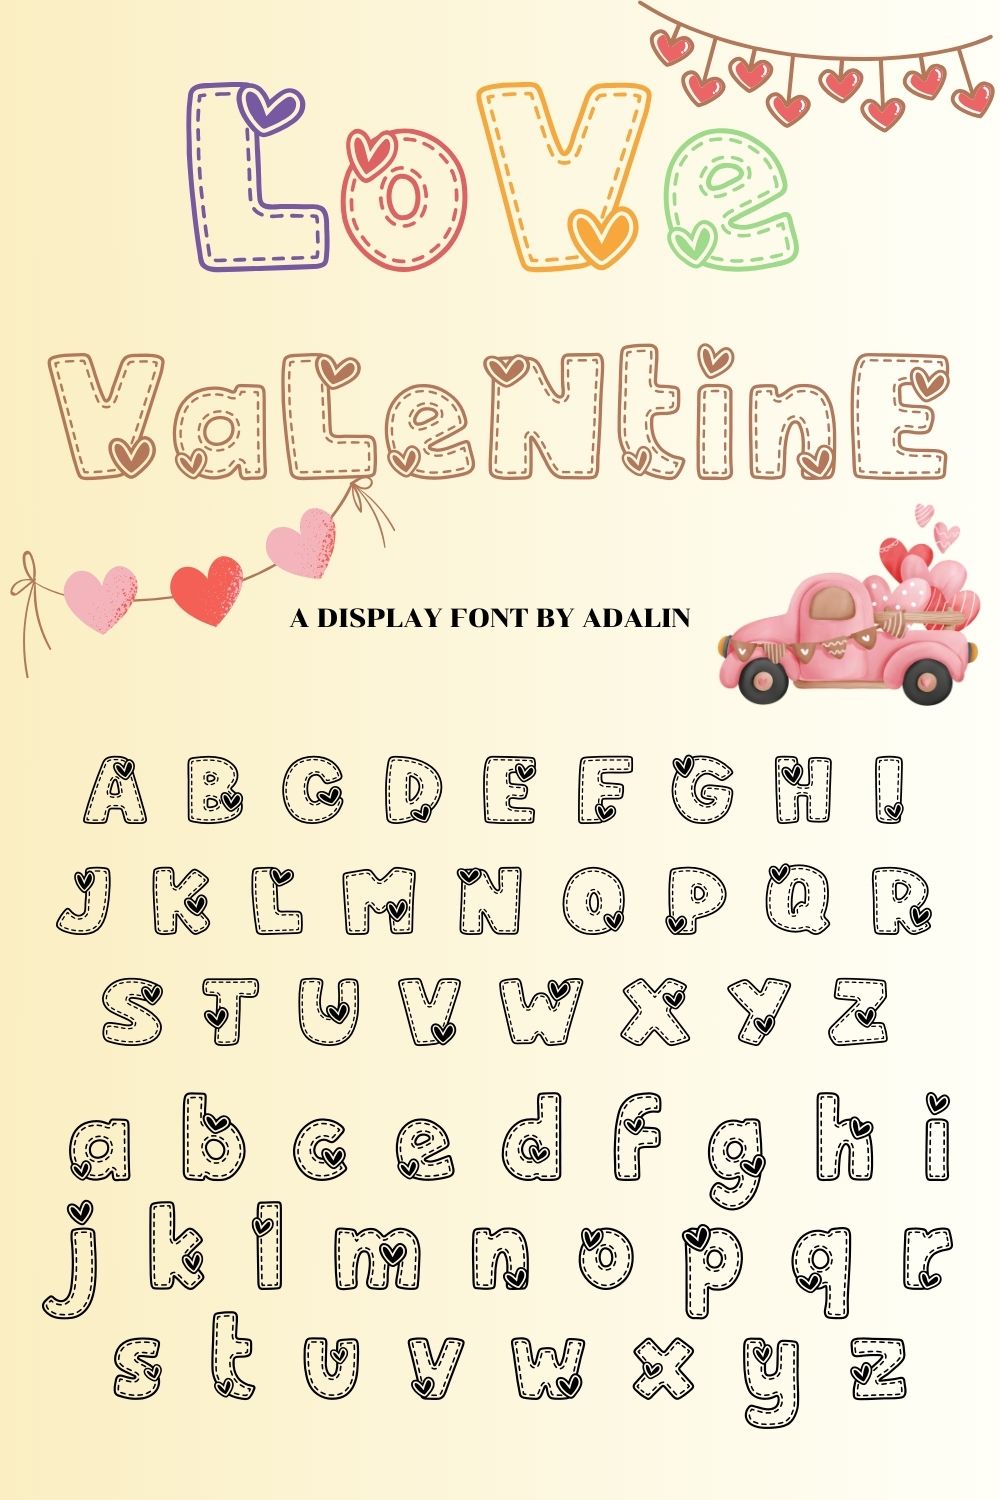 Love Valentine - Display Font pinterest preview image.